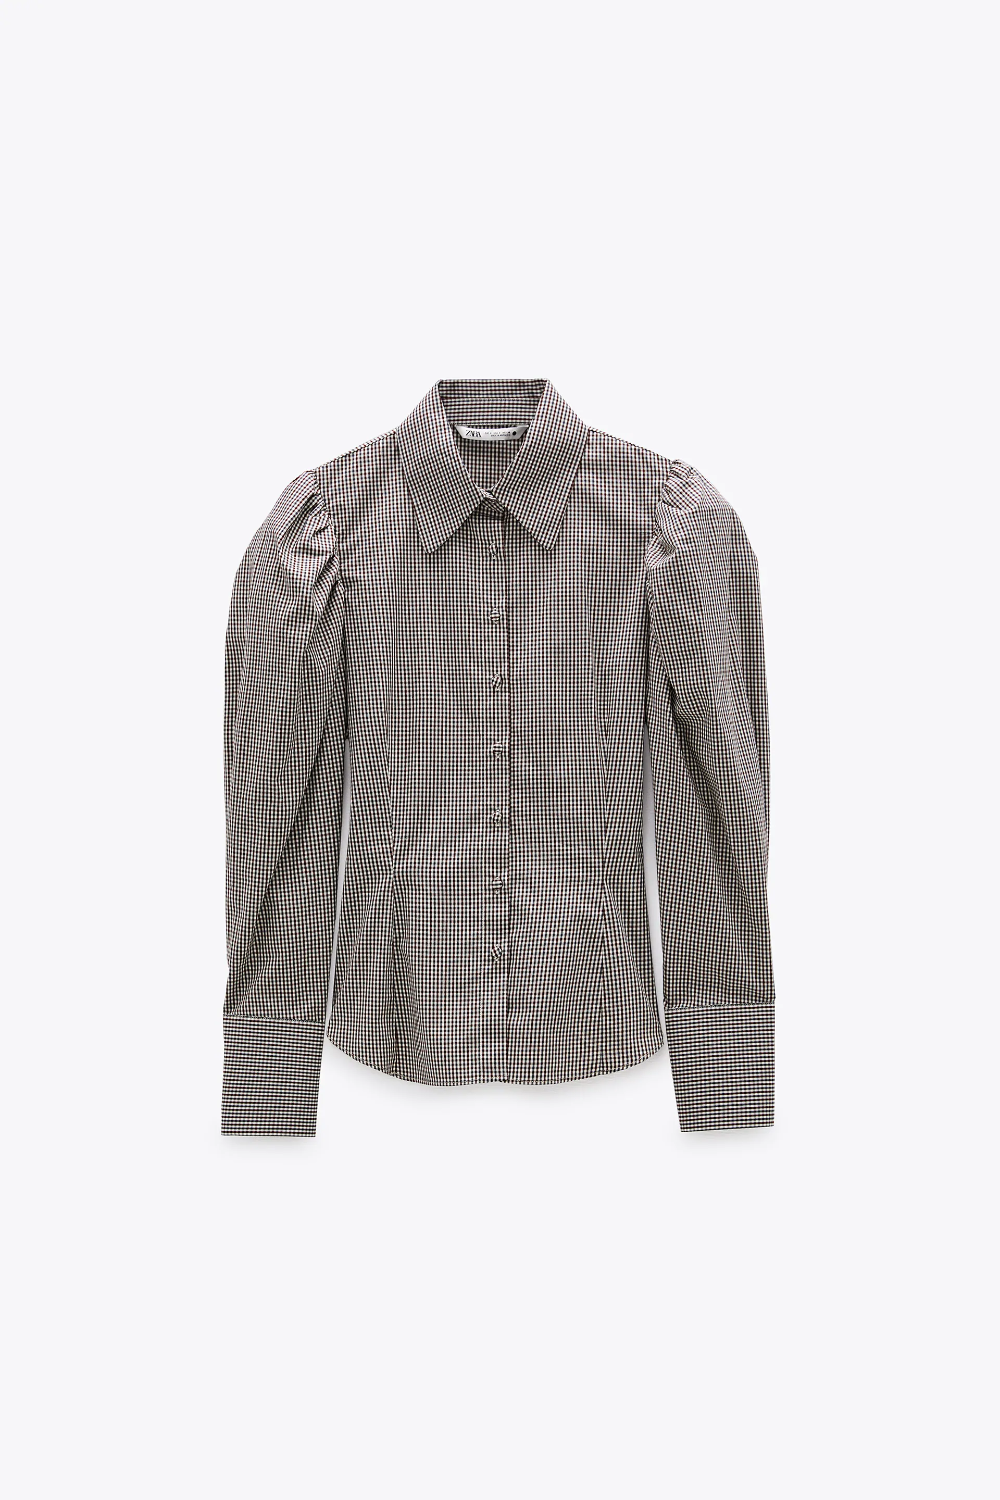 Zara Plaid Puff-Sleeve Shirt.png